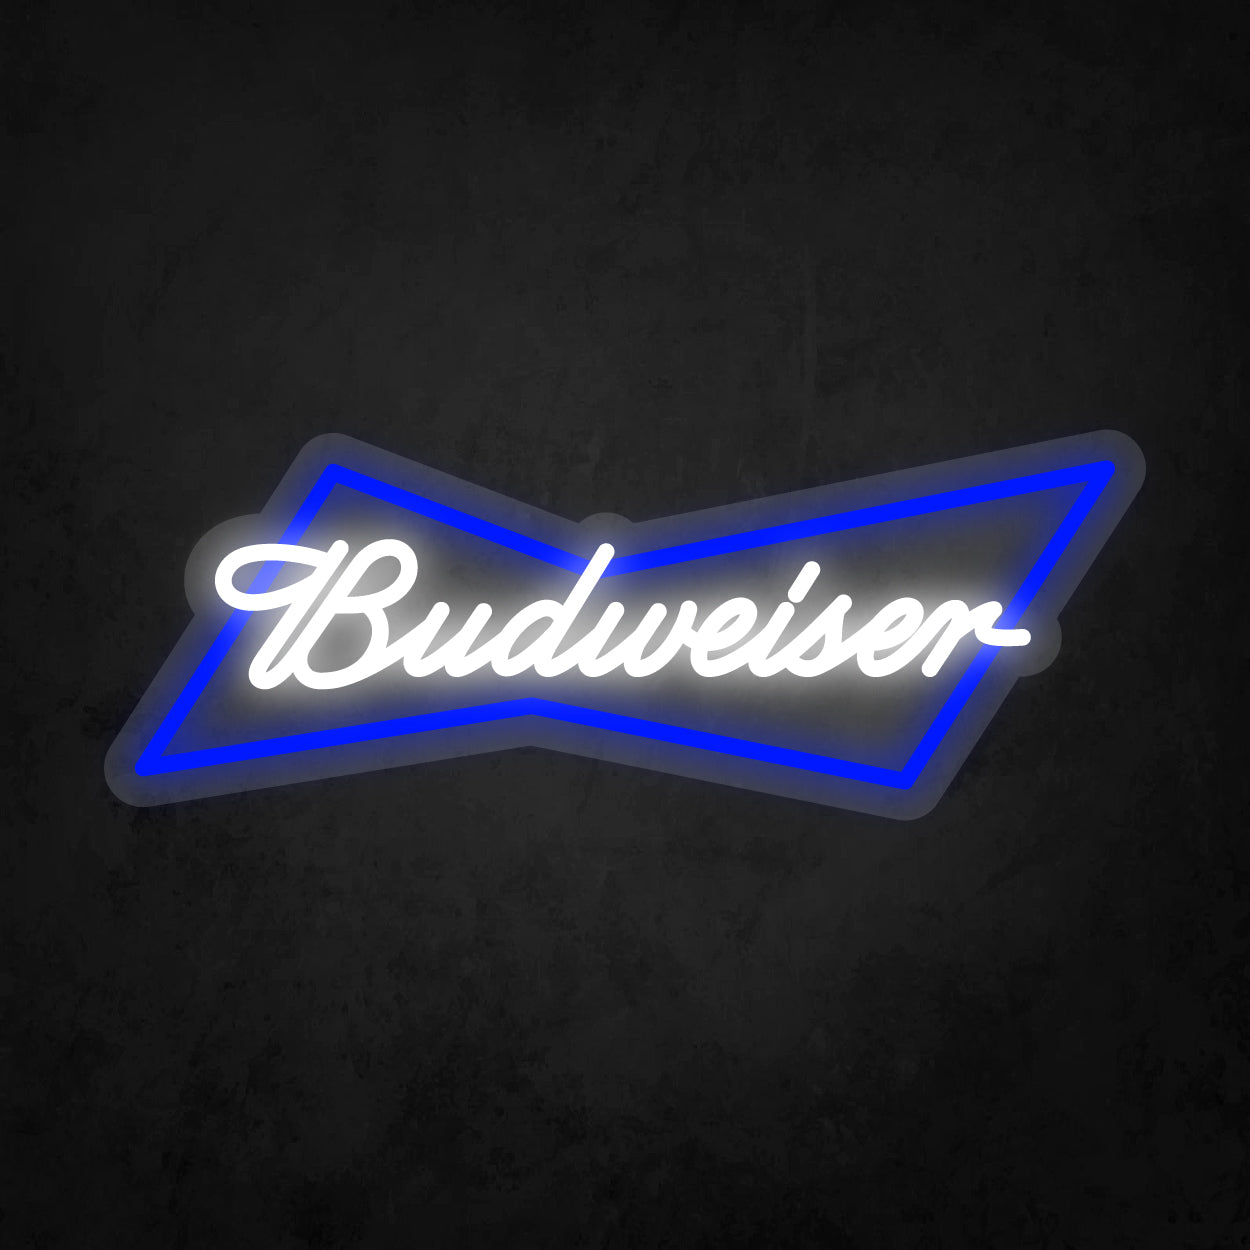 LED Neon Sign - Budweiser